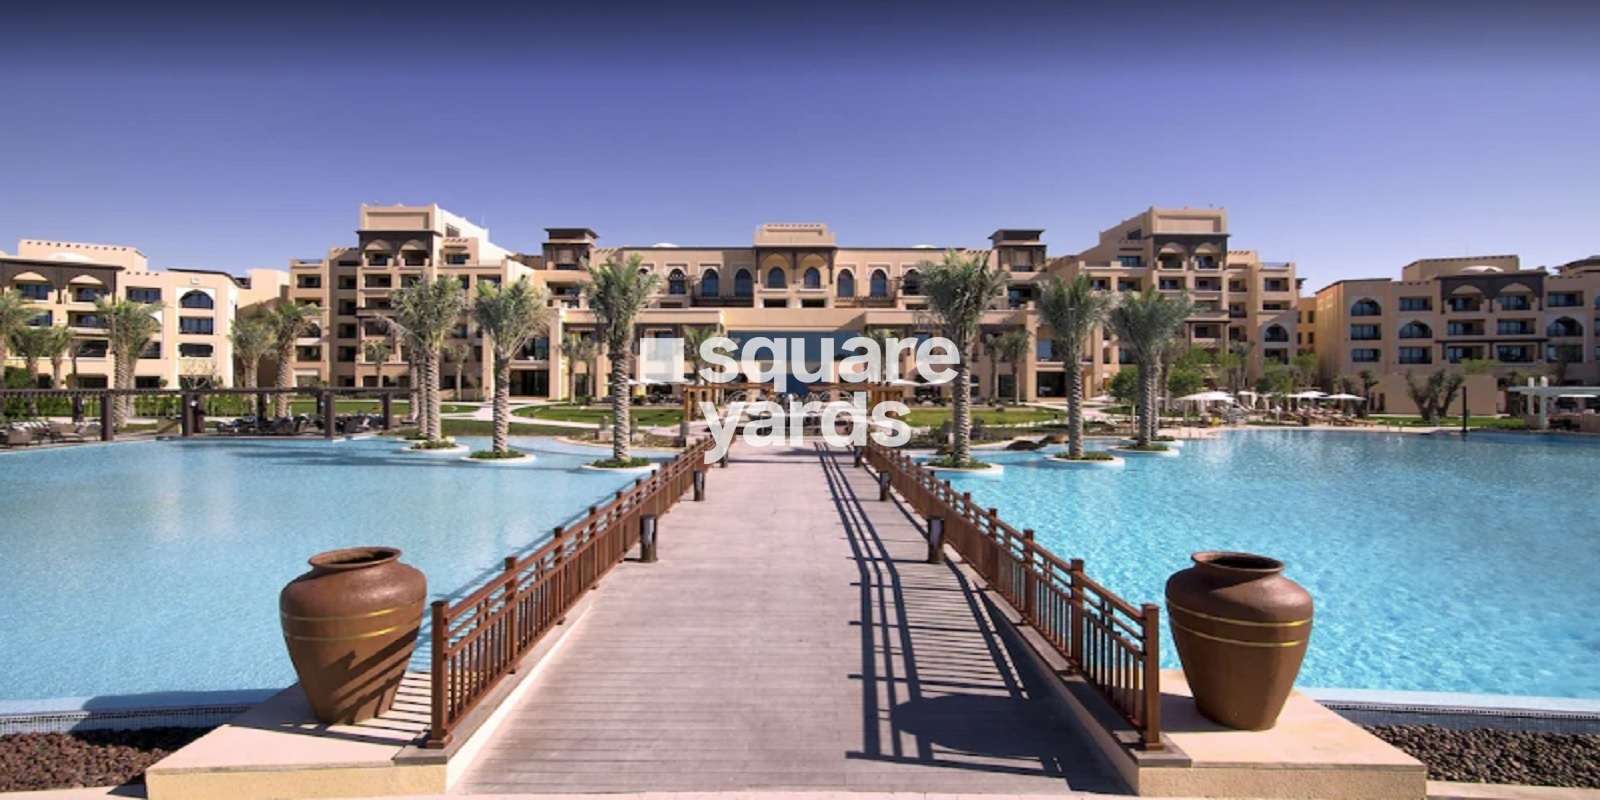 Saadiyat Rotana Resort And Villas Cover Image